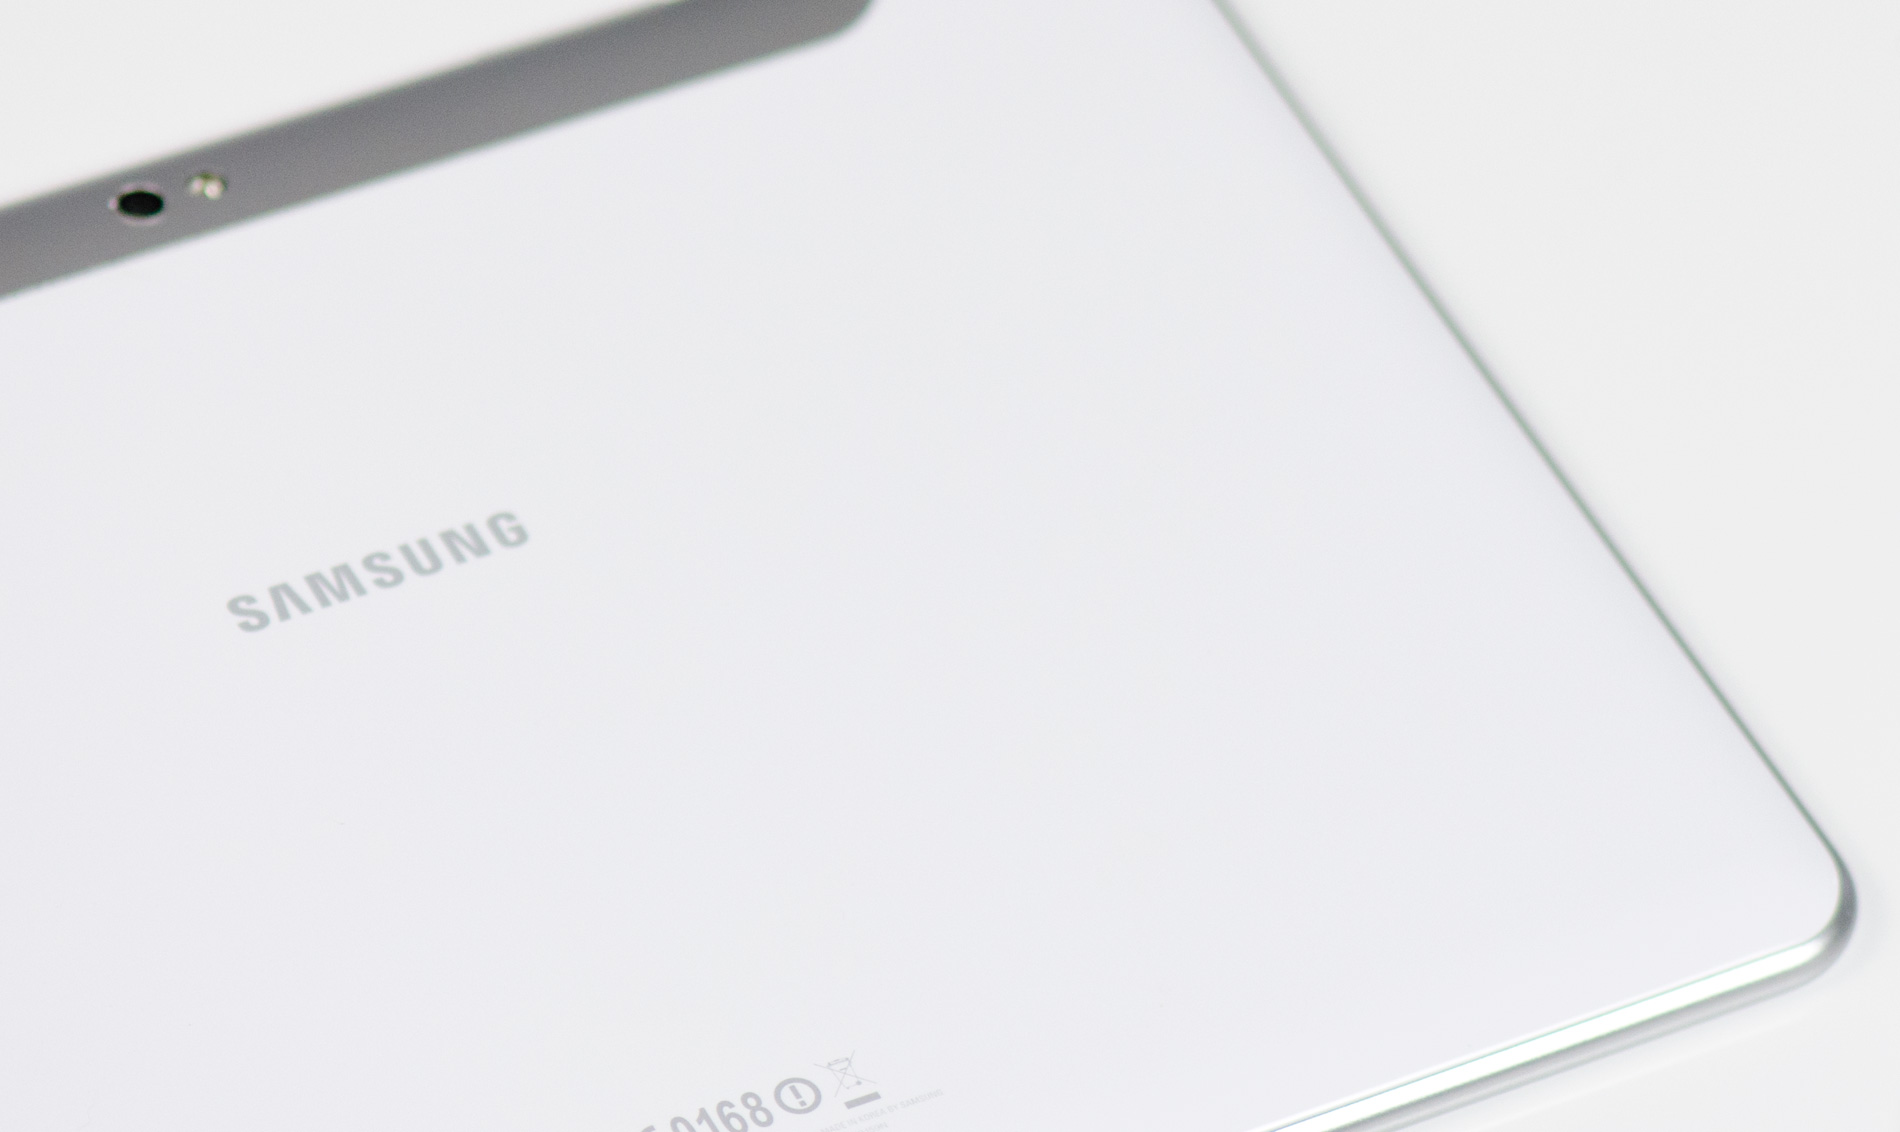 Pamflet sterk delicatesse The Hardware - Samsung Galaxy Tab 10.1 Review: The Sleekest Honeycomb Tablet